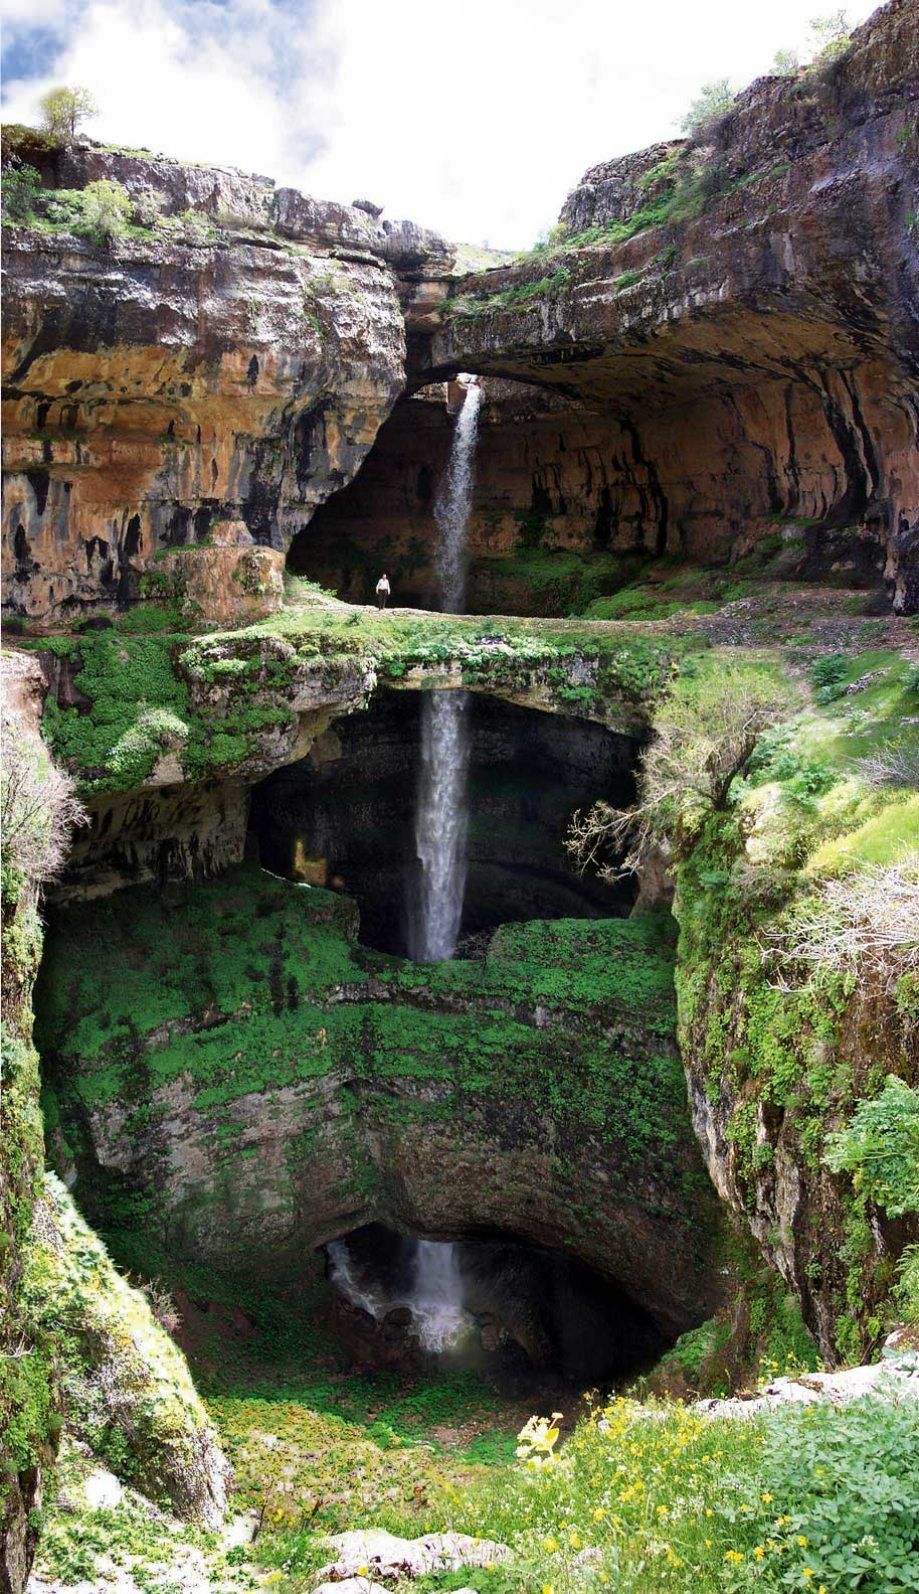 Balaa sinkhole in Lebanon